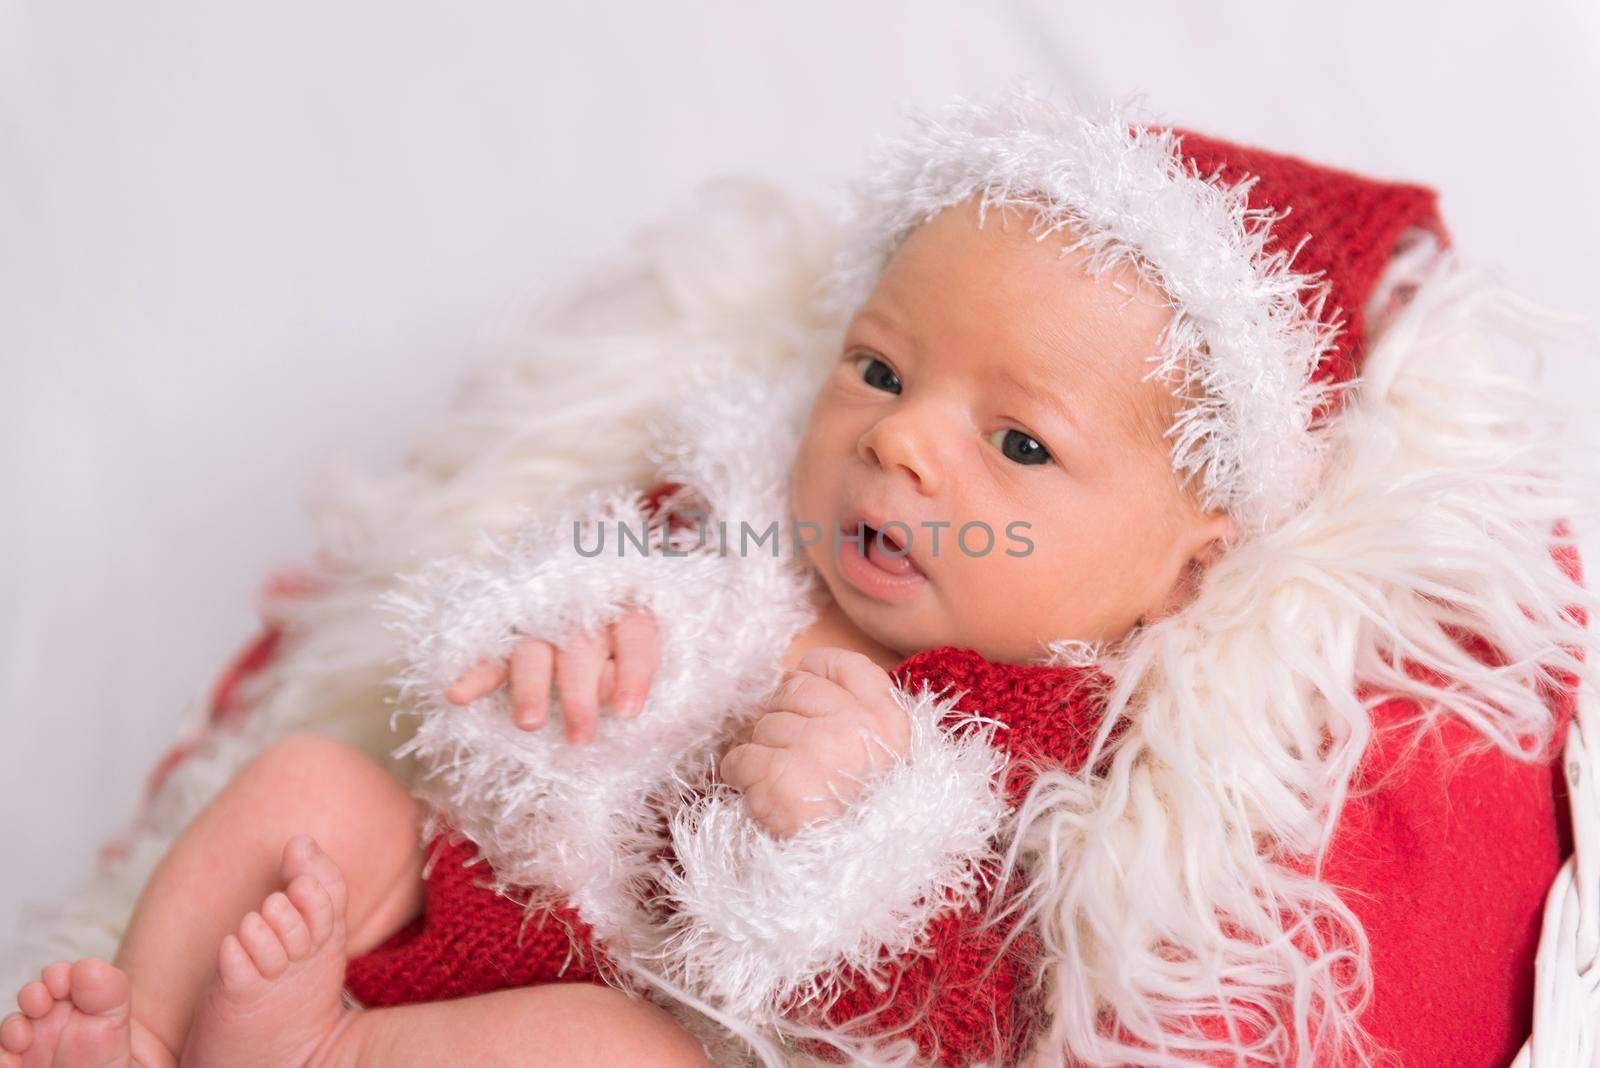 Infant dressed as Santa Claus by tan4ikk1